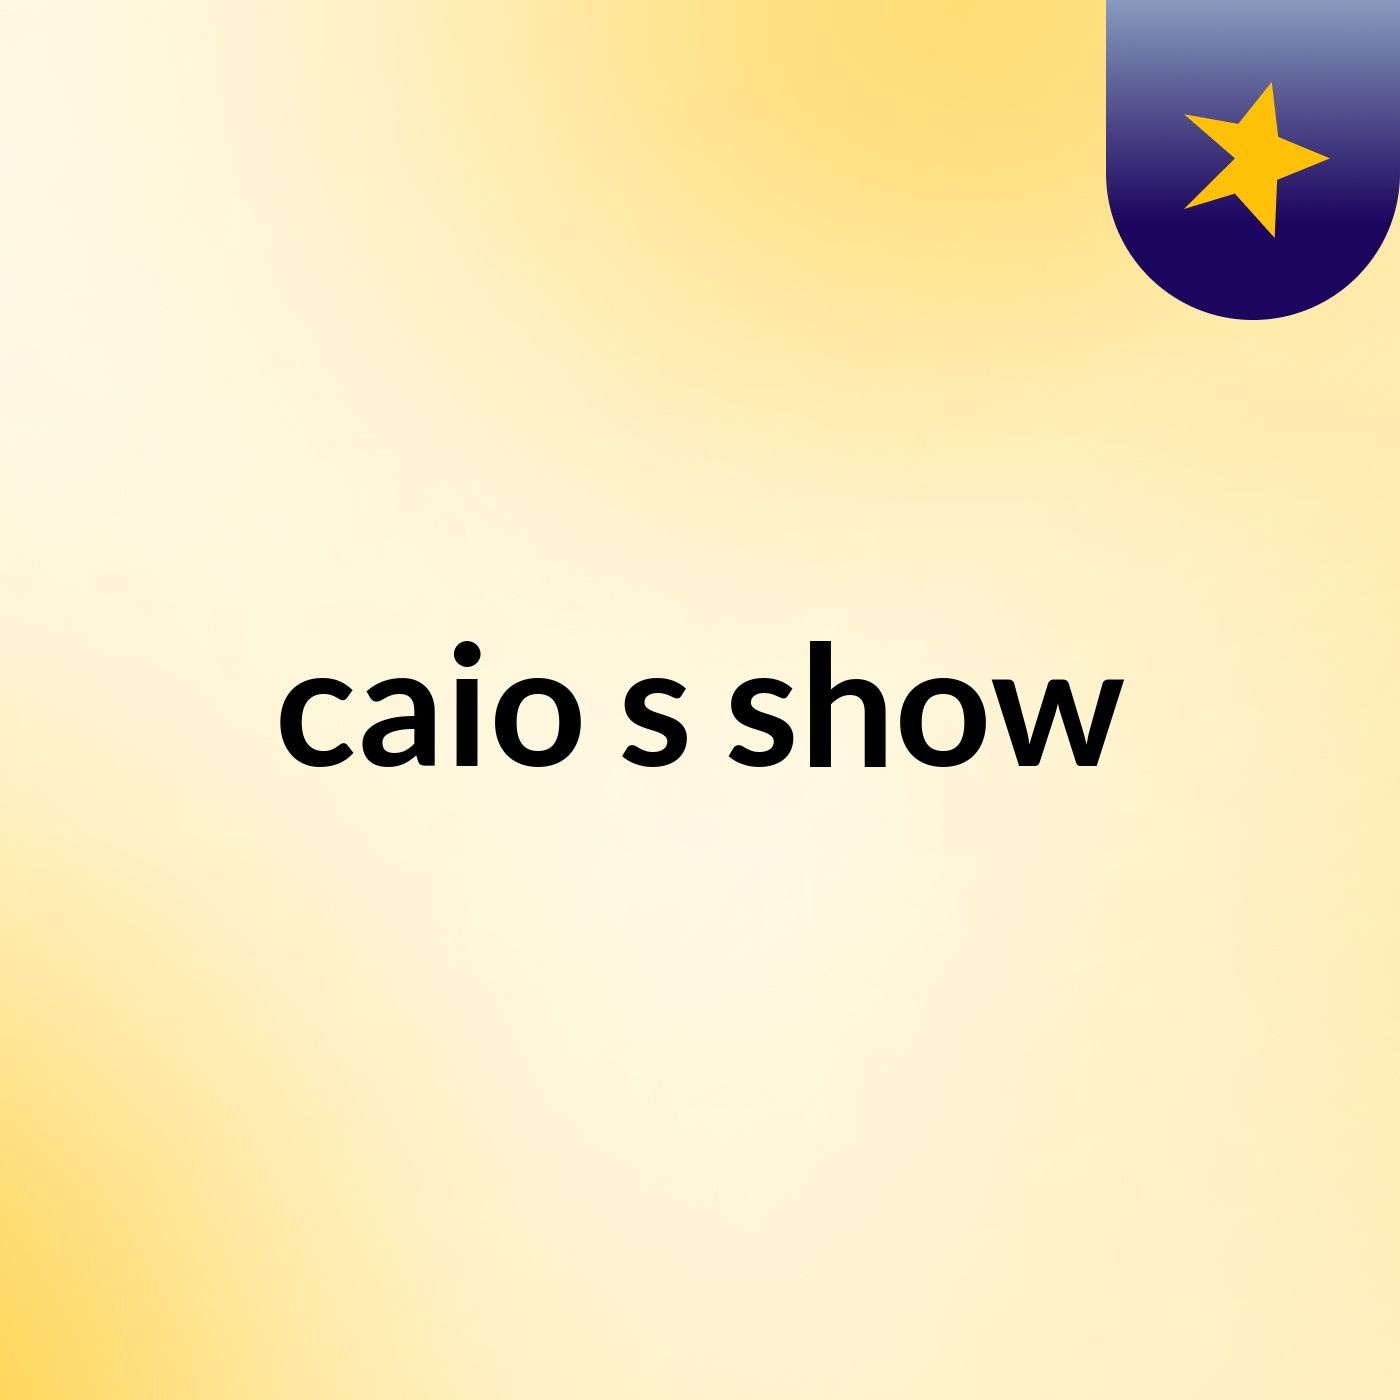 caio's show